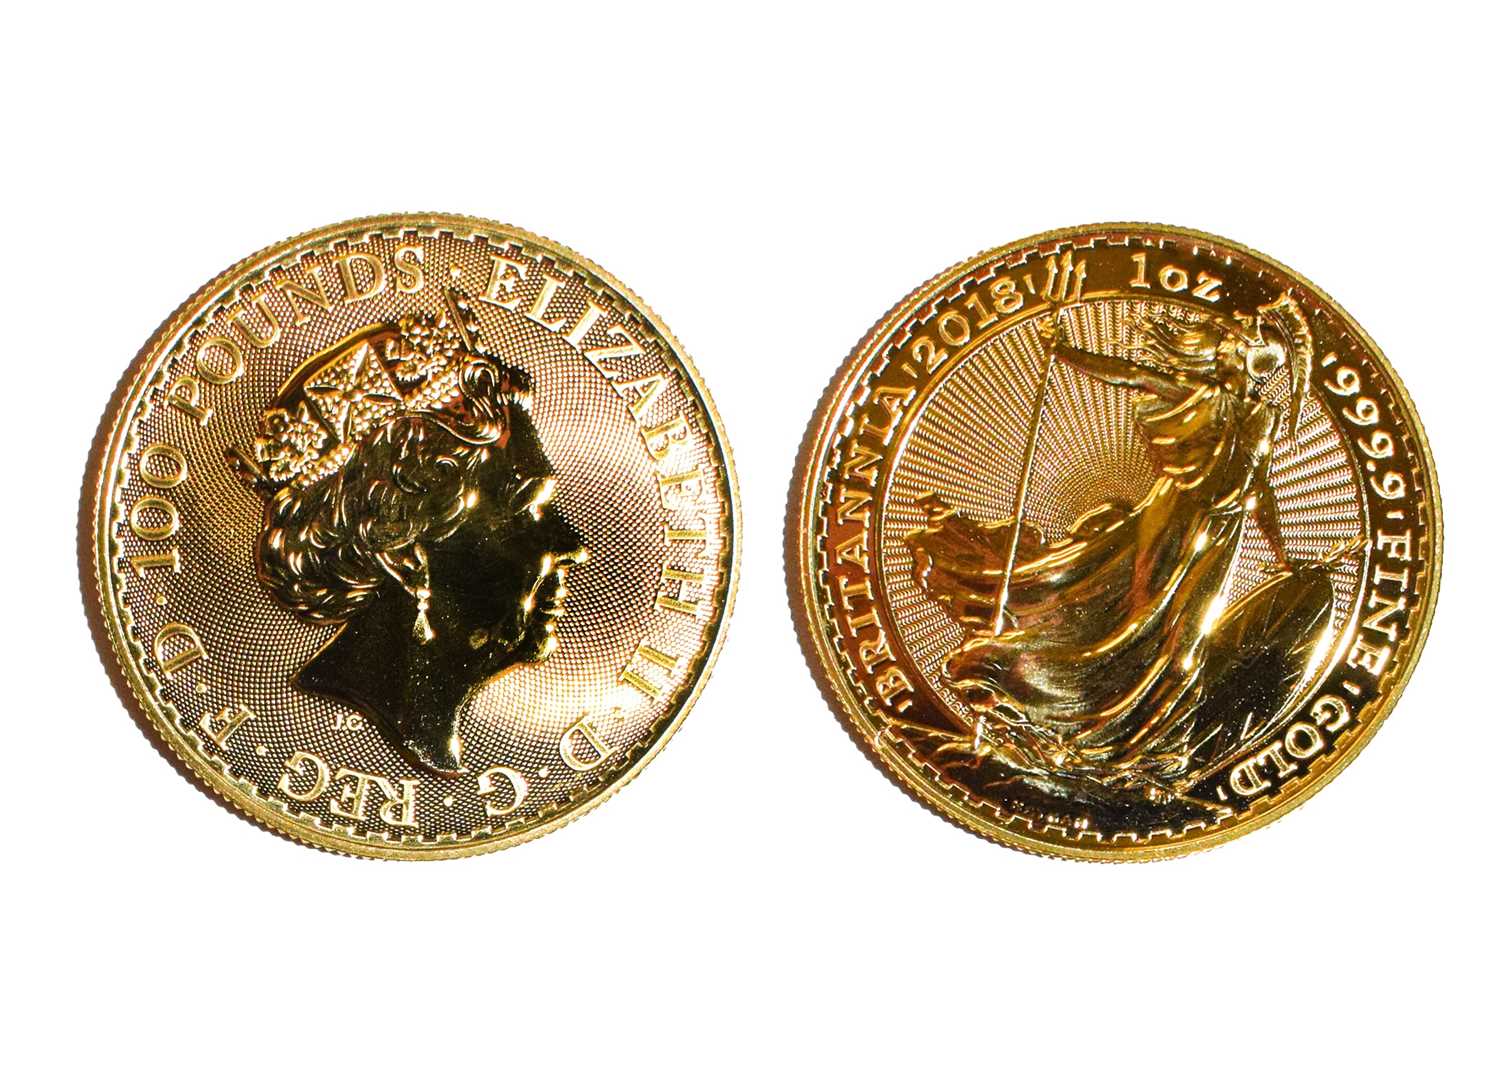 Lot 188 - 1oz Britannia gold coin